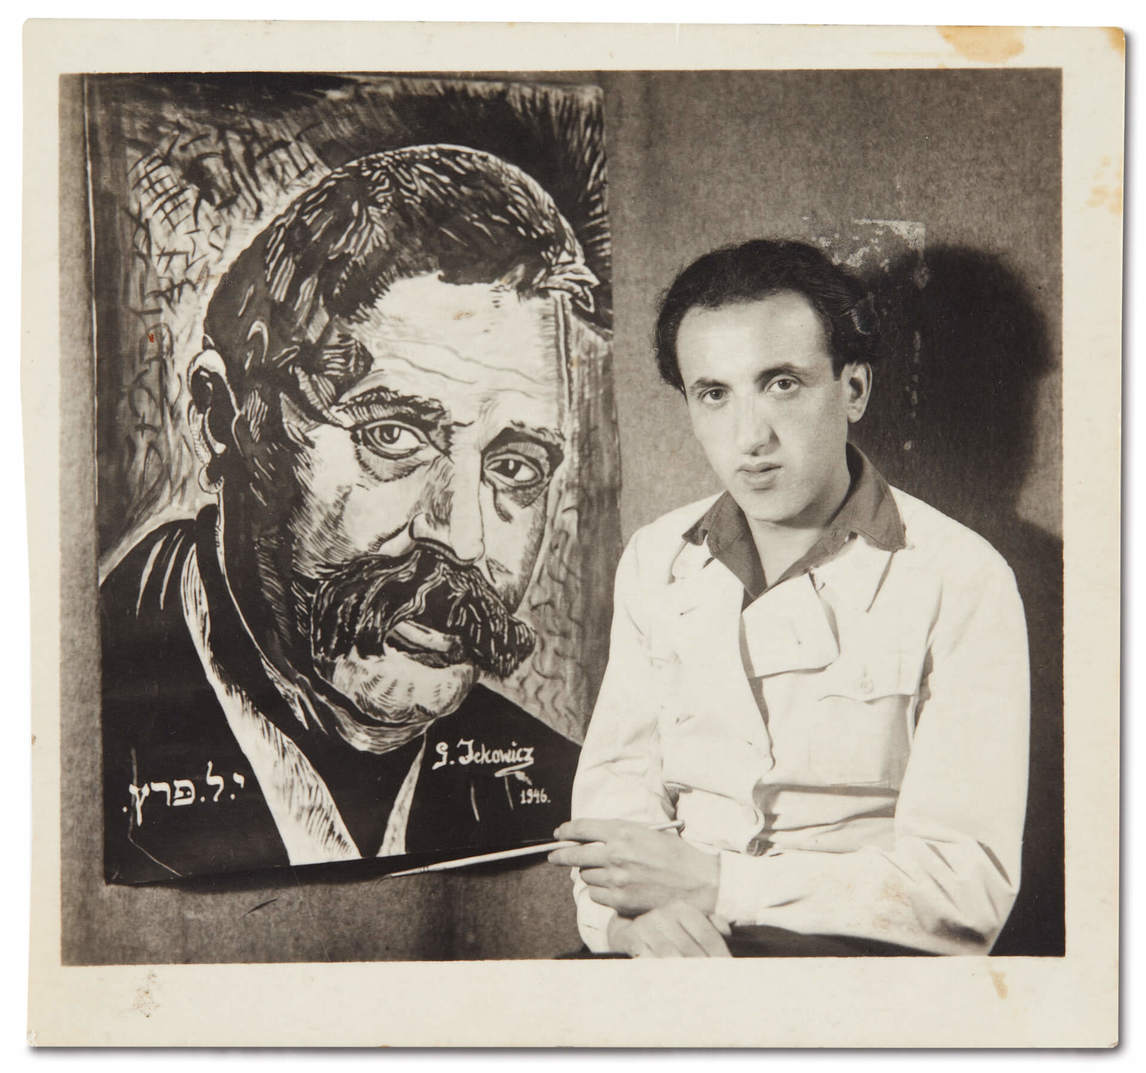 Art Canada Institute, photograph of Gershon Iskowitz and portrait of Isaac Leib. Peretz, Feldafing, 1946